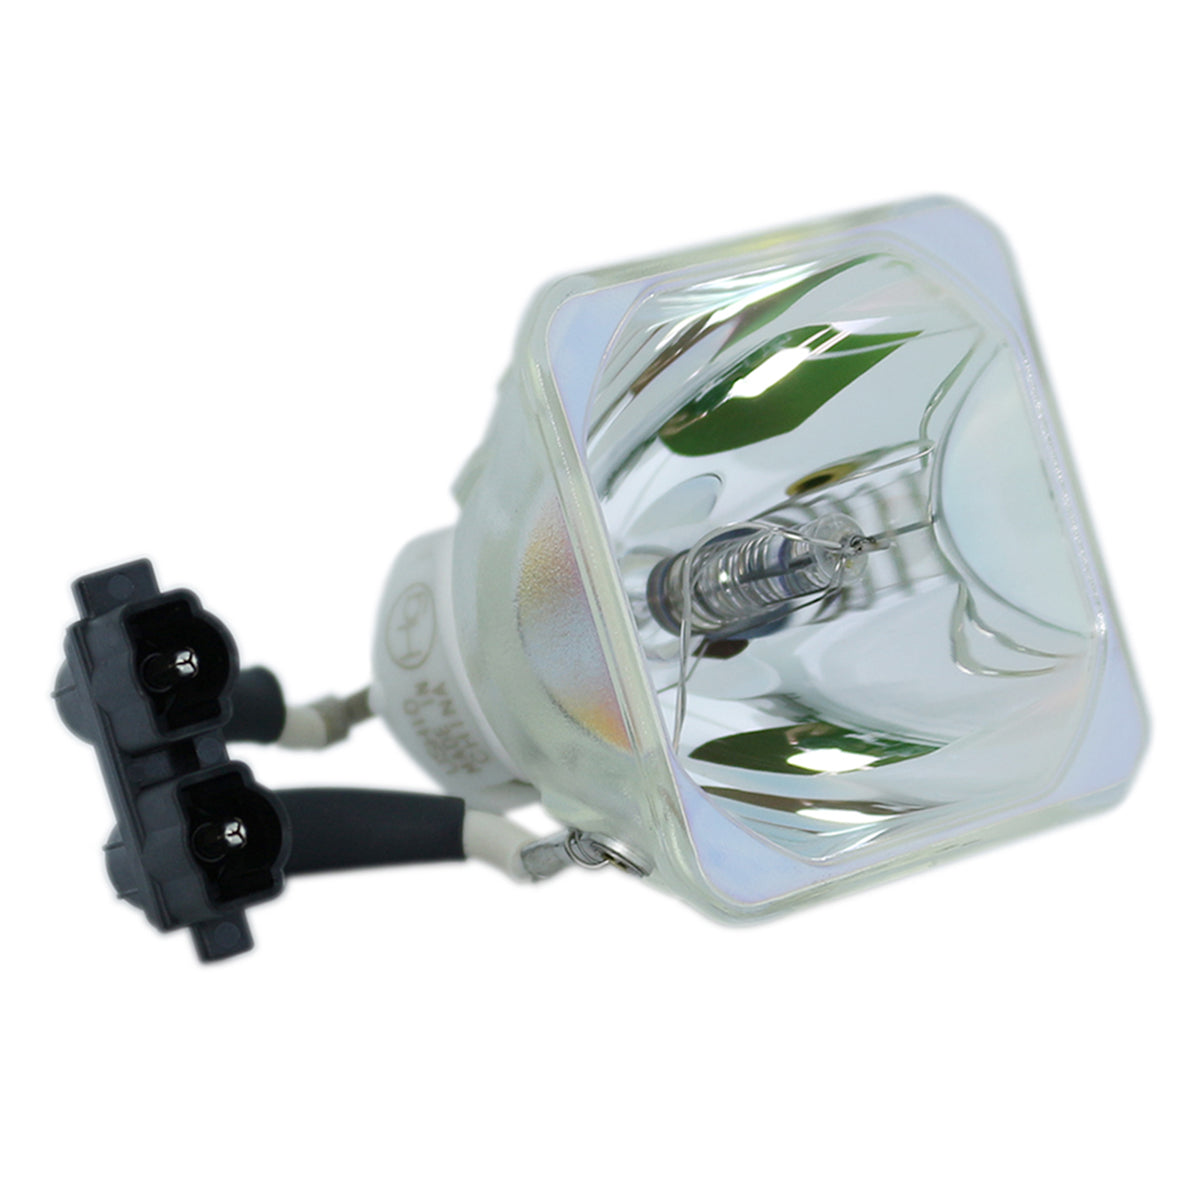 Dukane 456-8763A Ushio Projector Bare Lamp